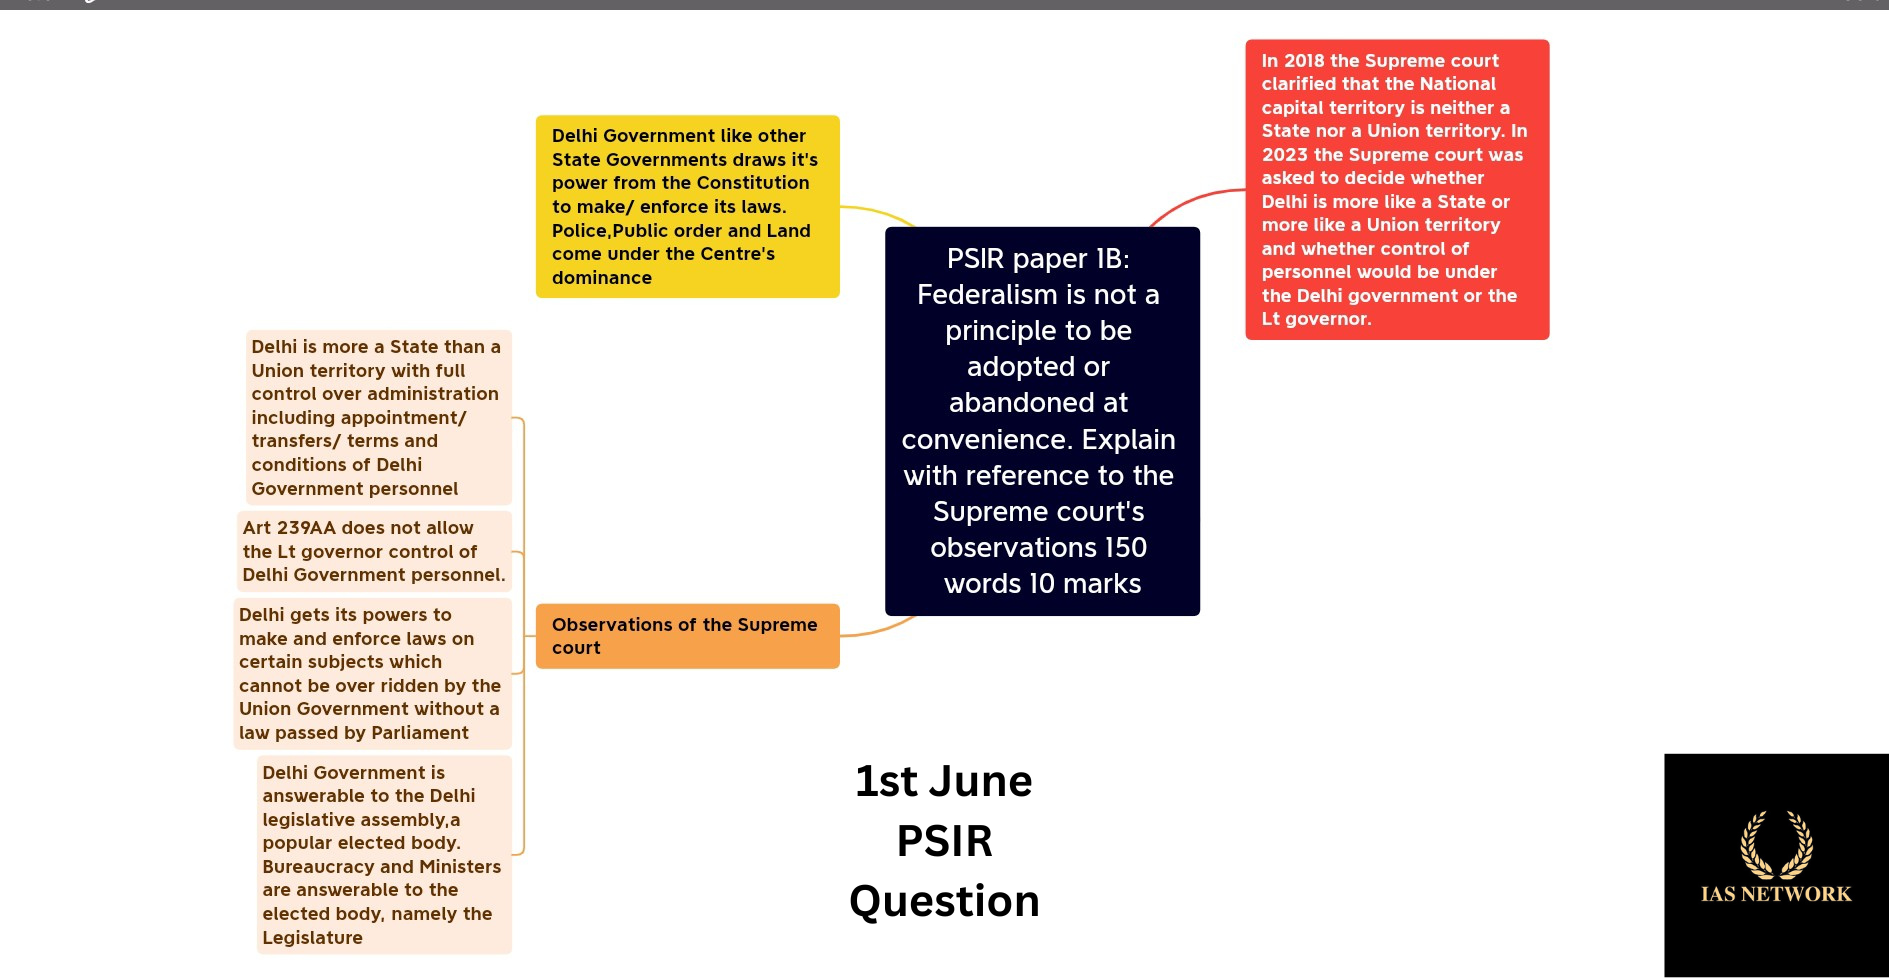 IAS NETWORK 1st JUNE PSIR QUESTION